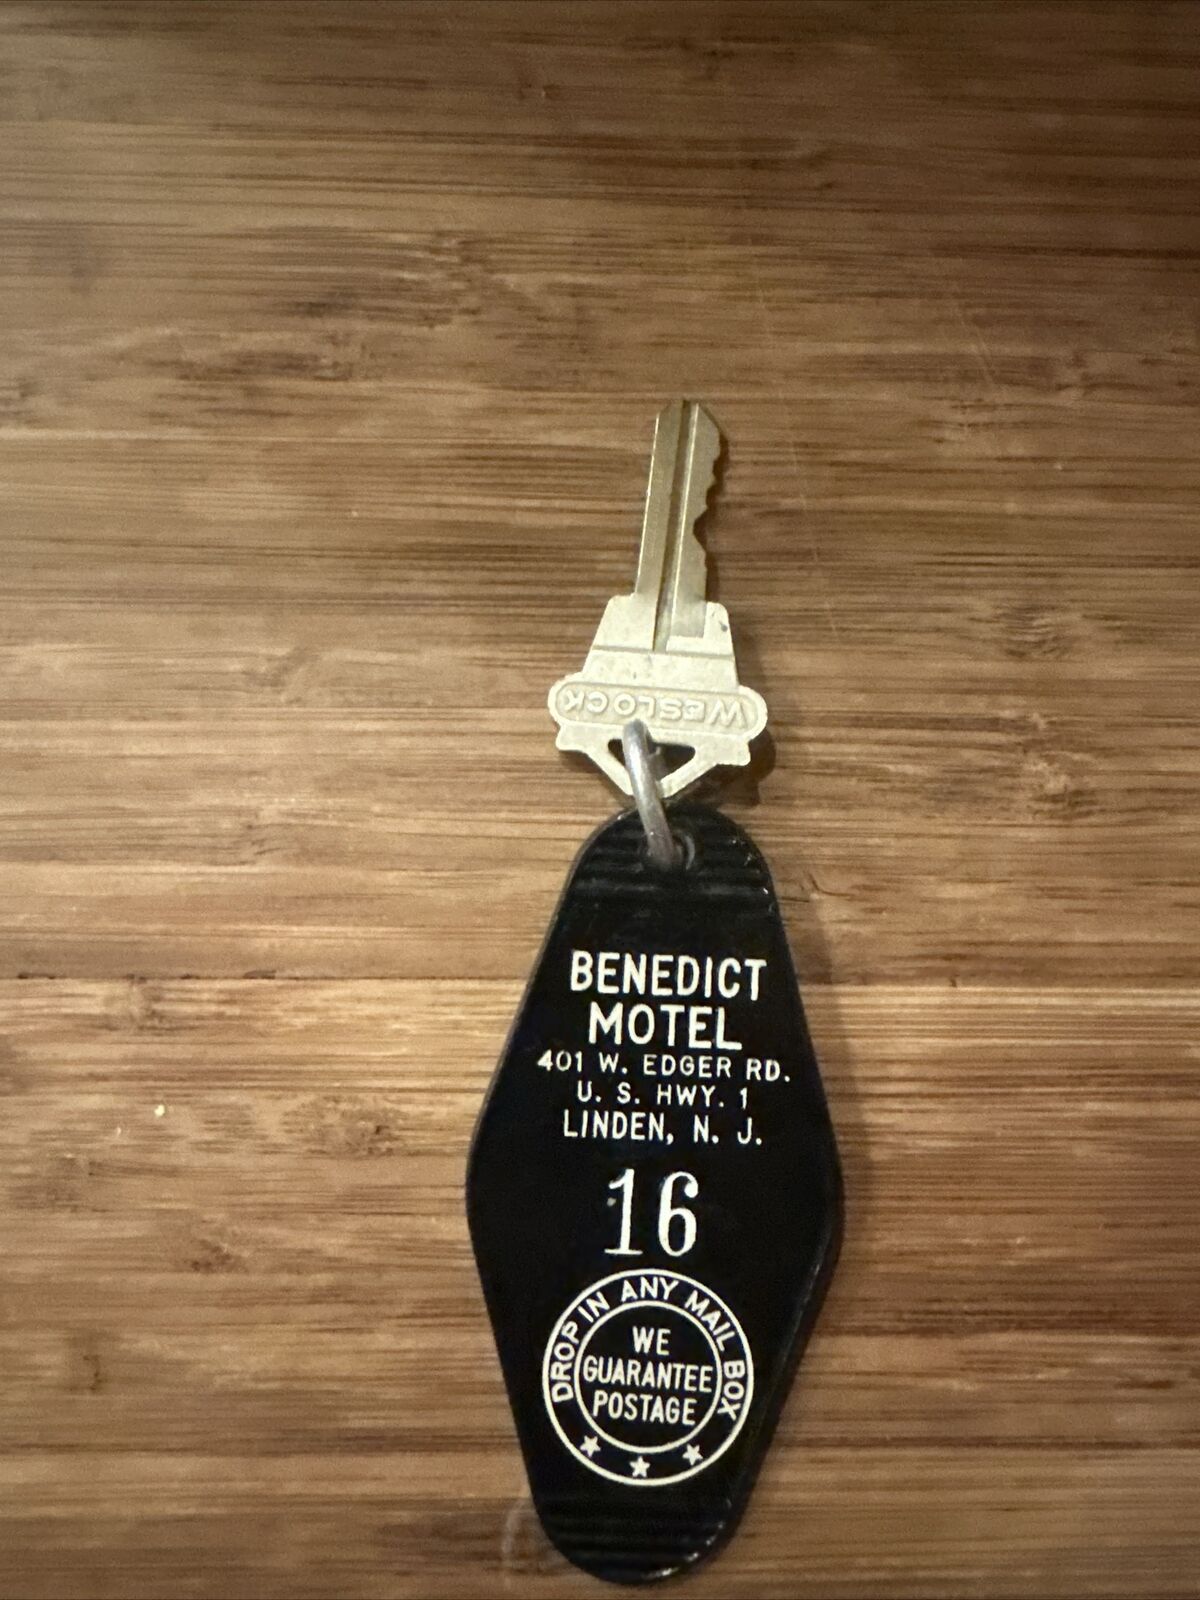 Benedict Motel Hotel Room Key Fob & Key Linden N.J. #16 RARE